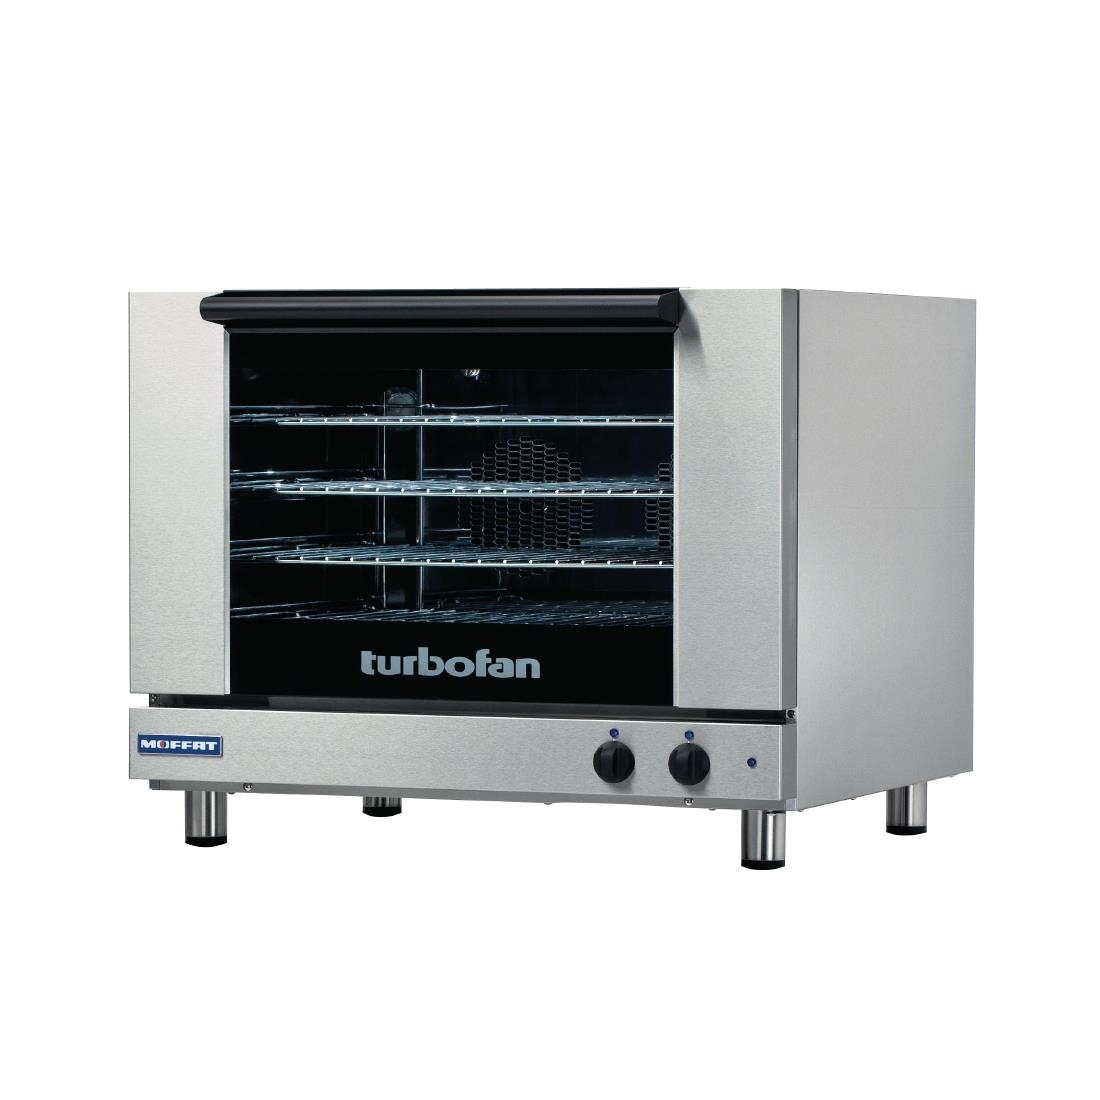 GK608 Blue Seal Turbofan Convection Oven E28M4 JD Catering Equipment Solutions Ltd